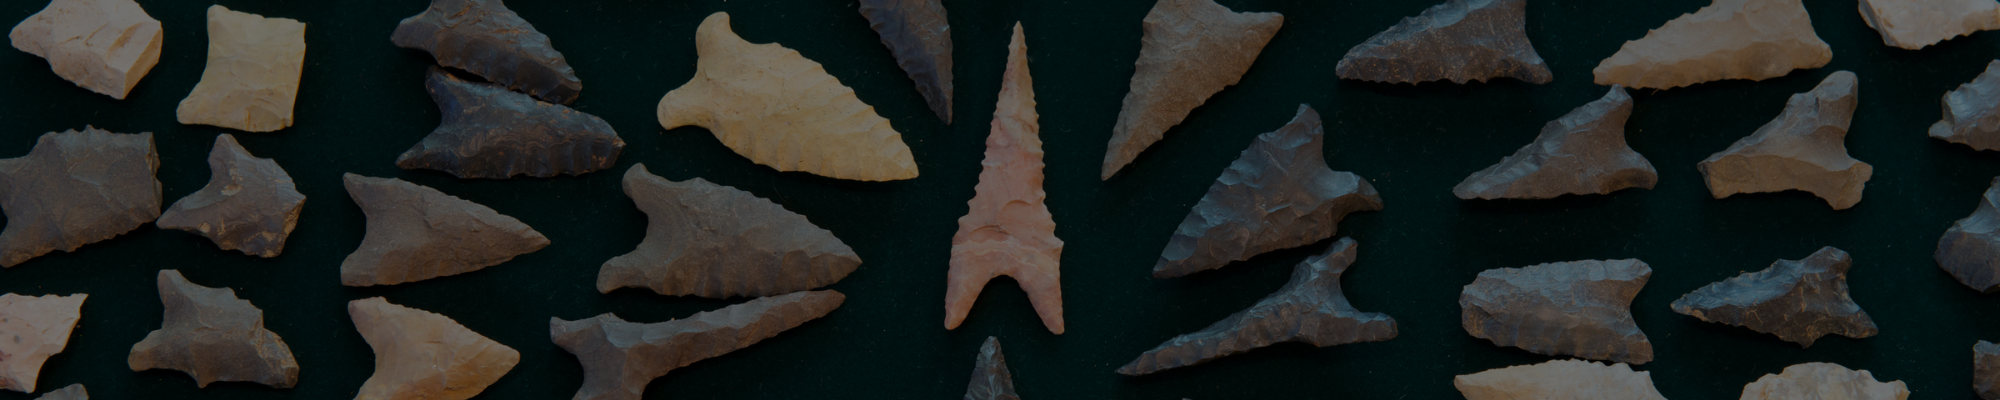 Image of arrowheads